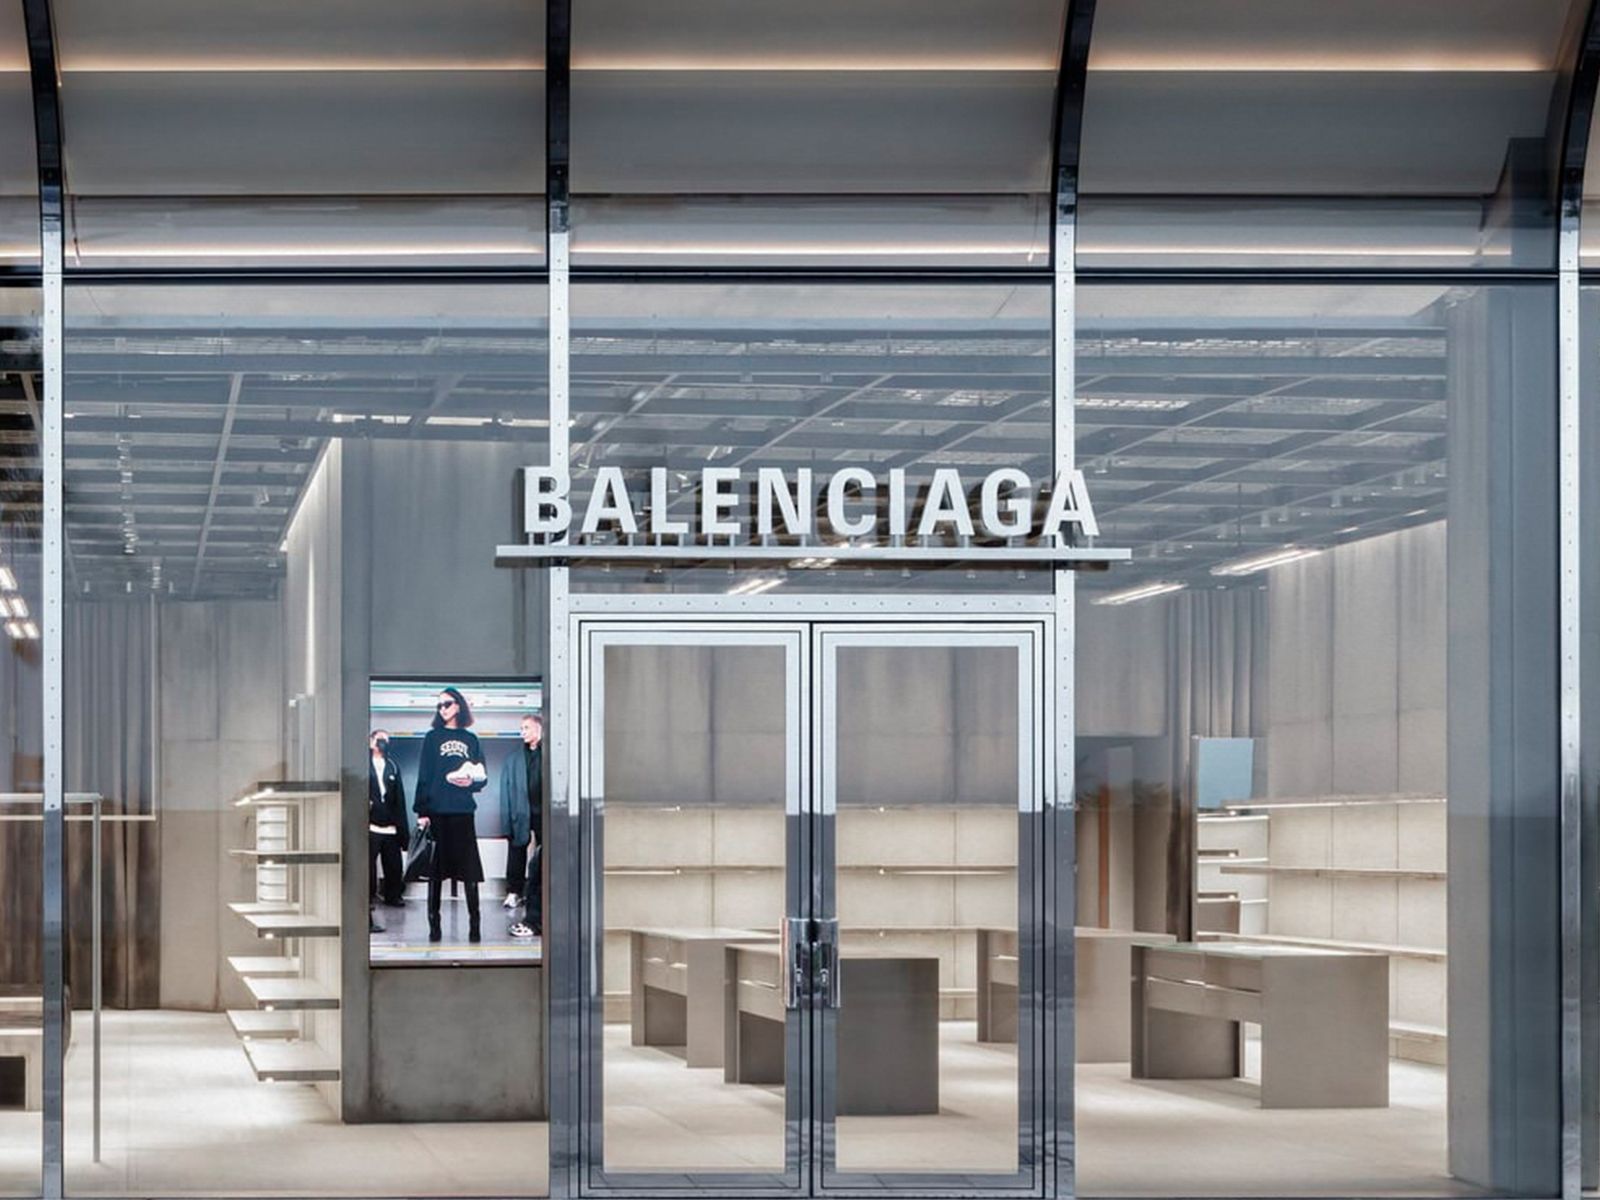 Balenciaga launches its own resale program